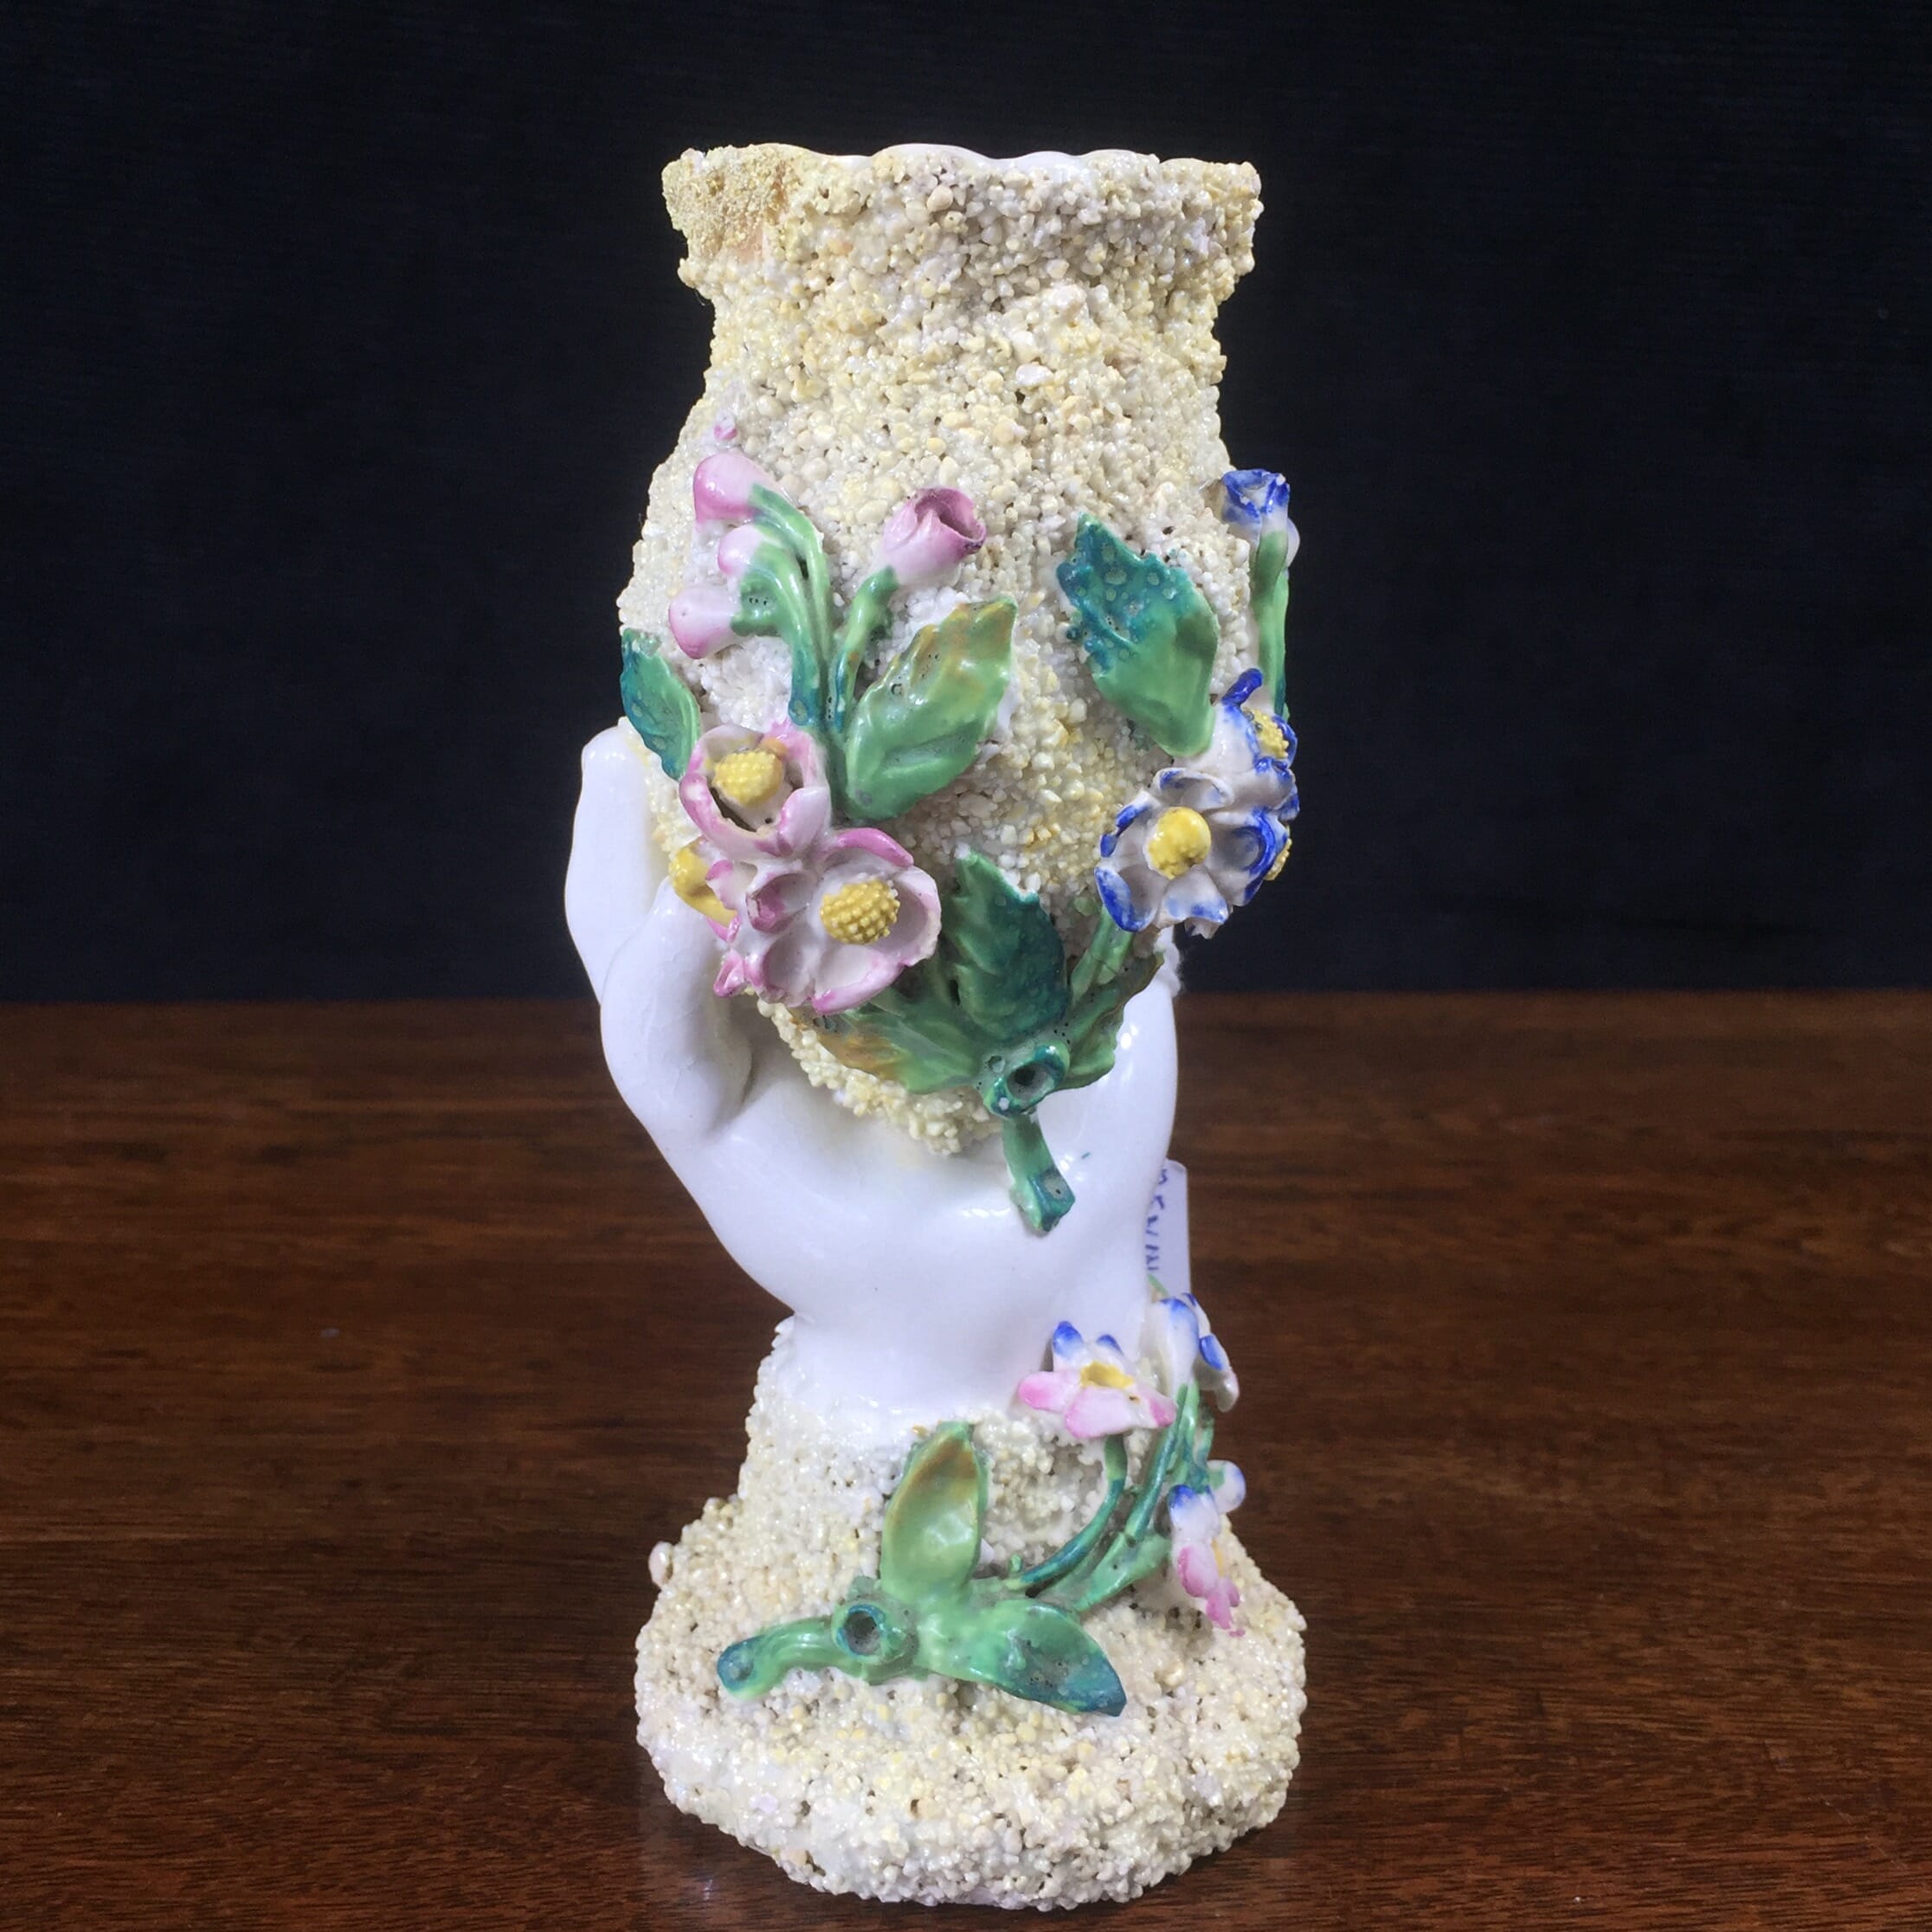 Bevington porcelain vase moulded as a hand holding a pot with applied flowers. c. 1880-0